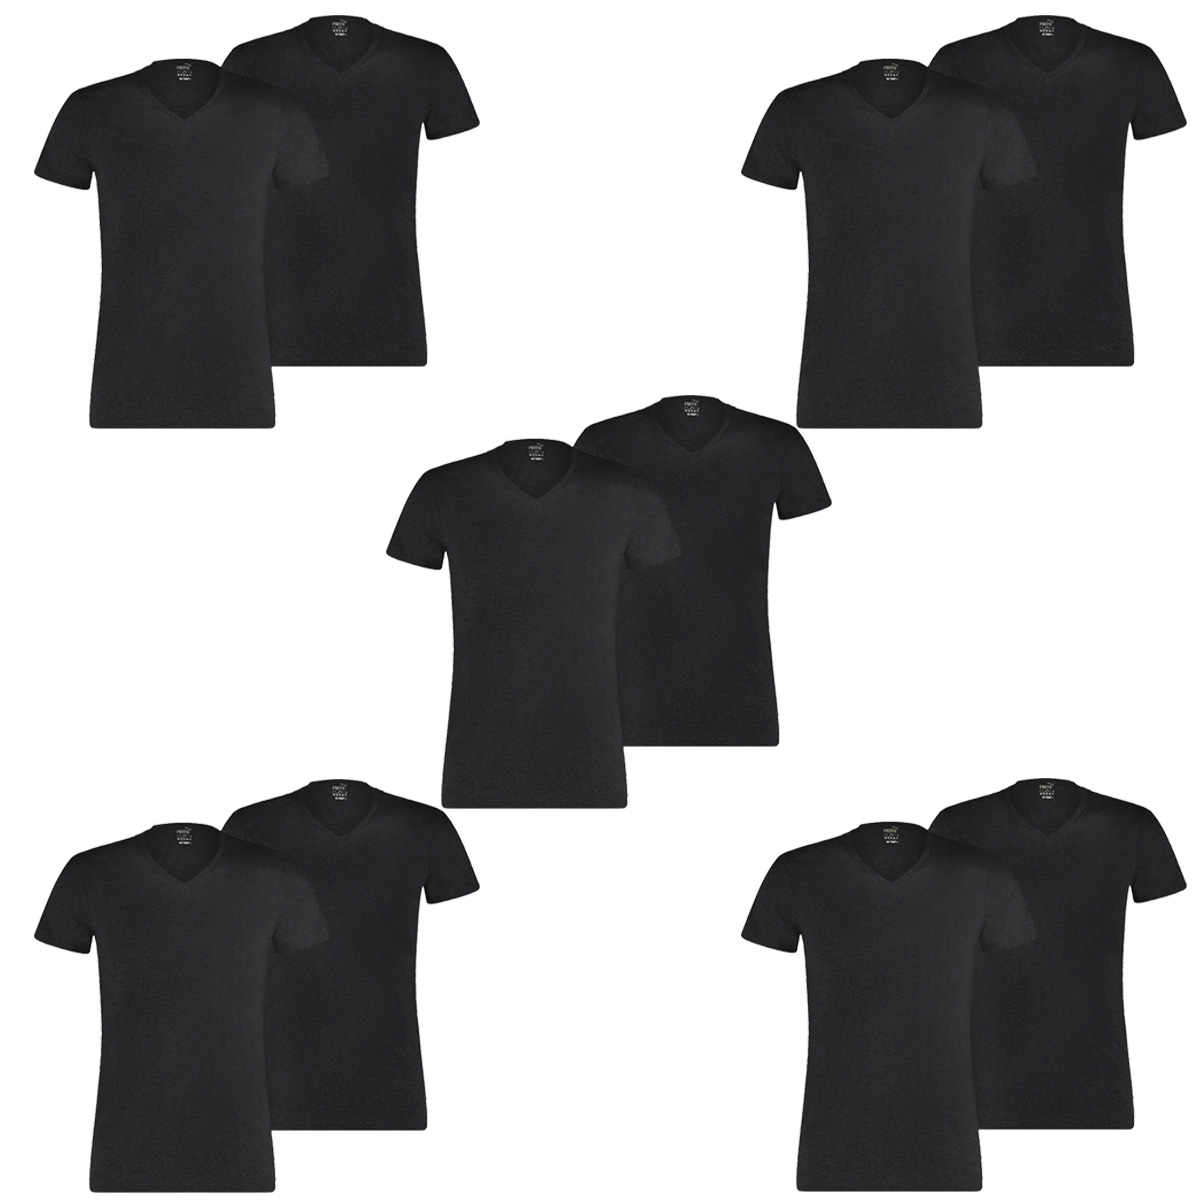 10 er Pack Puma Basic V Neck T-Shirt Men Herren Unterhemd V-Ausschnitt von Puma